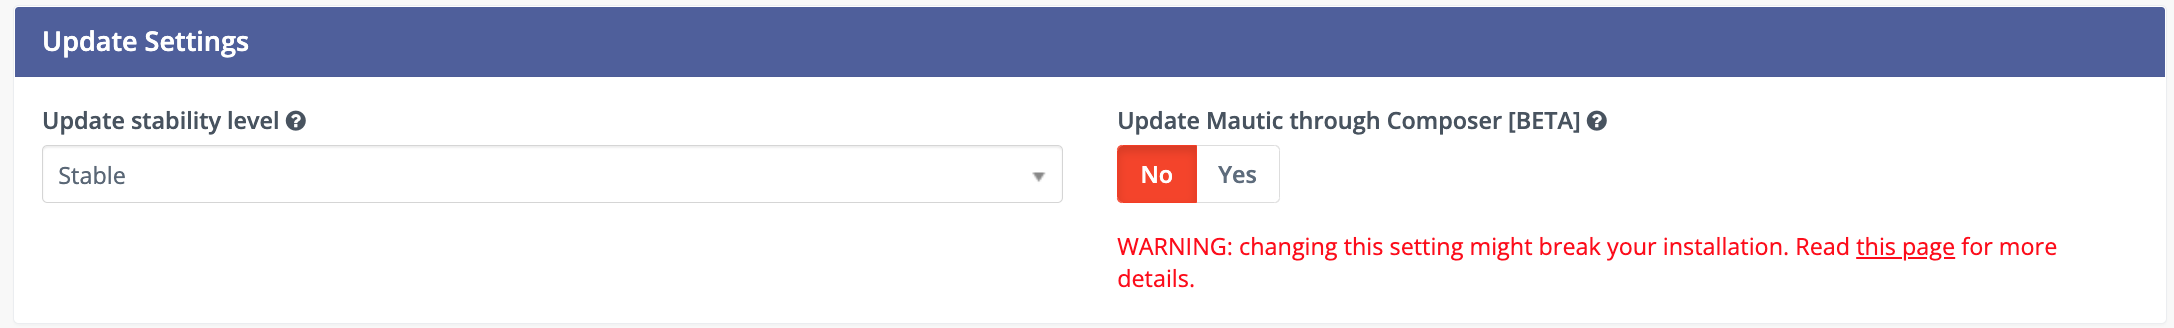 Screenshot showing Update Settings Configuration in Mautic